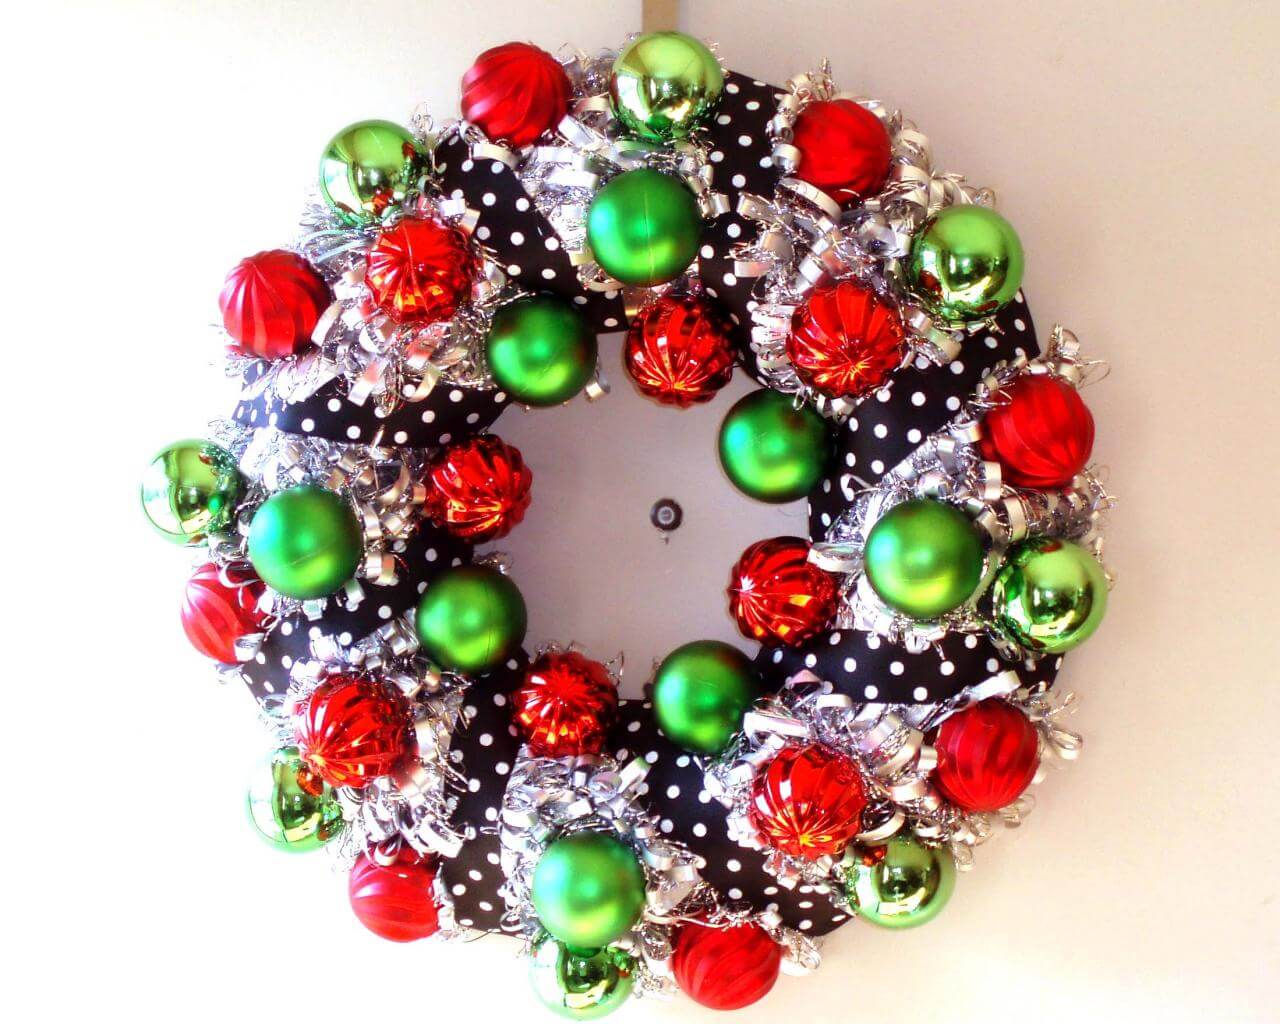 DIY Gorgeous Wreath Craft For Christmas Wall Decor